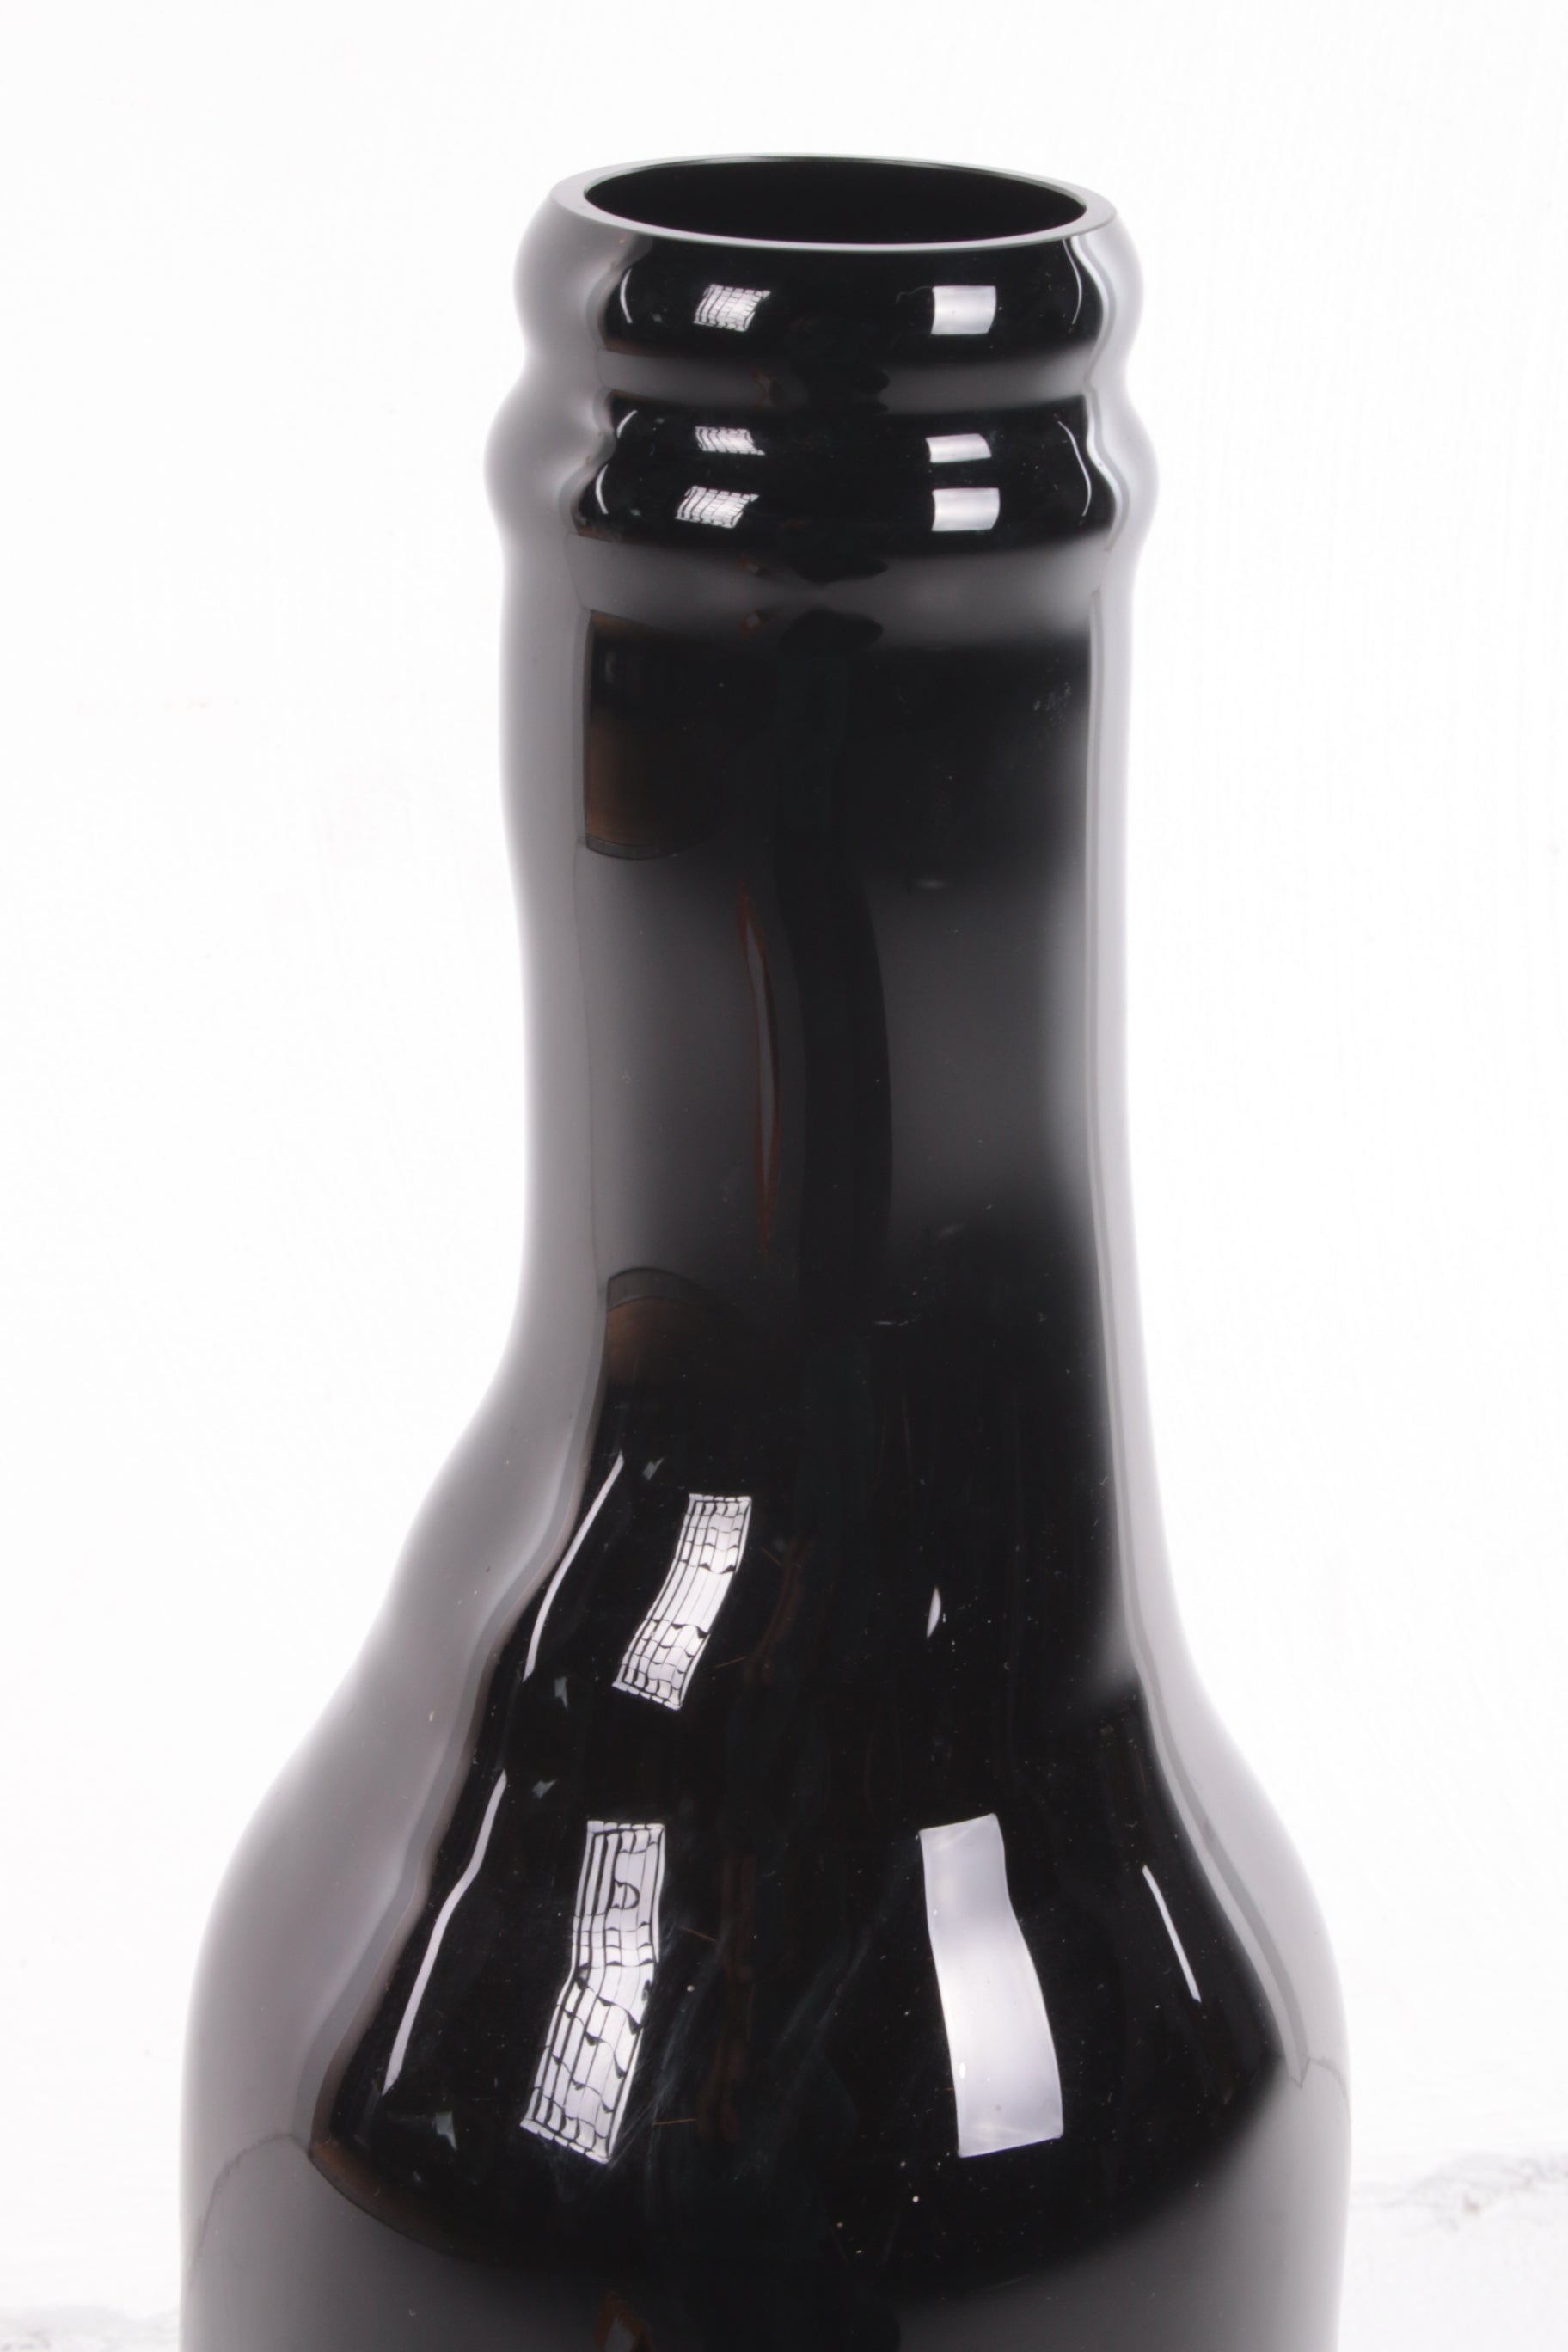 Zwarte fles royal leerdam A37 Unica Strabelle